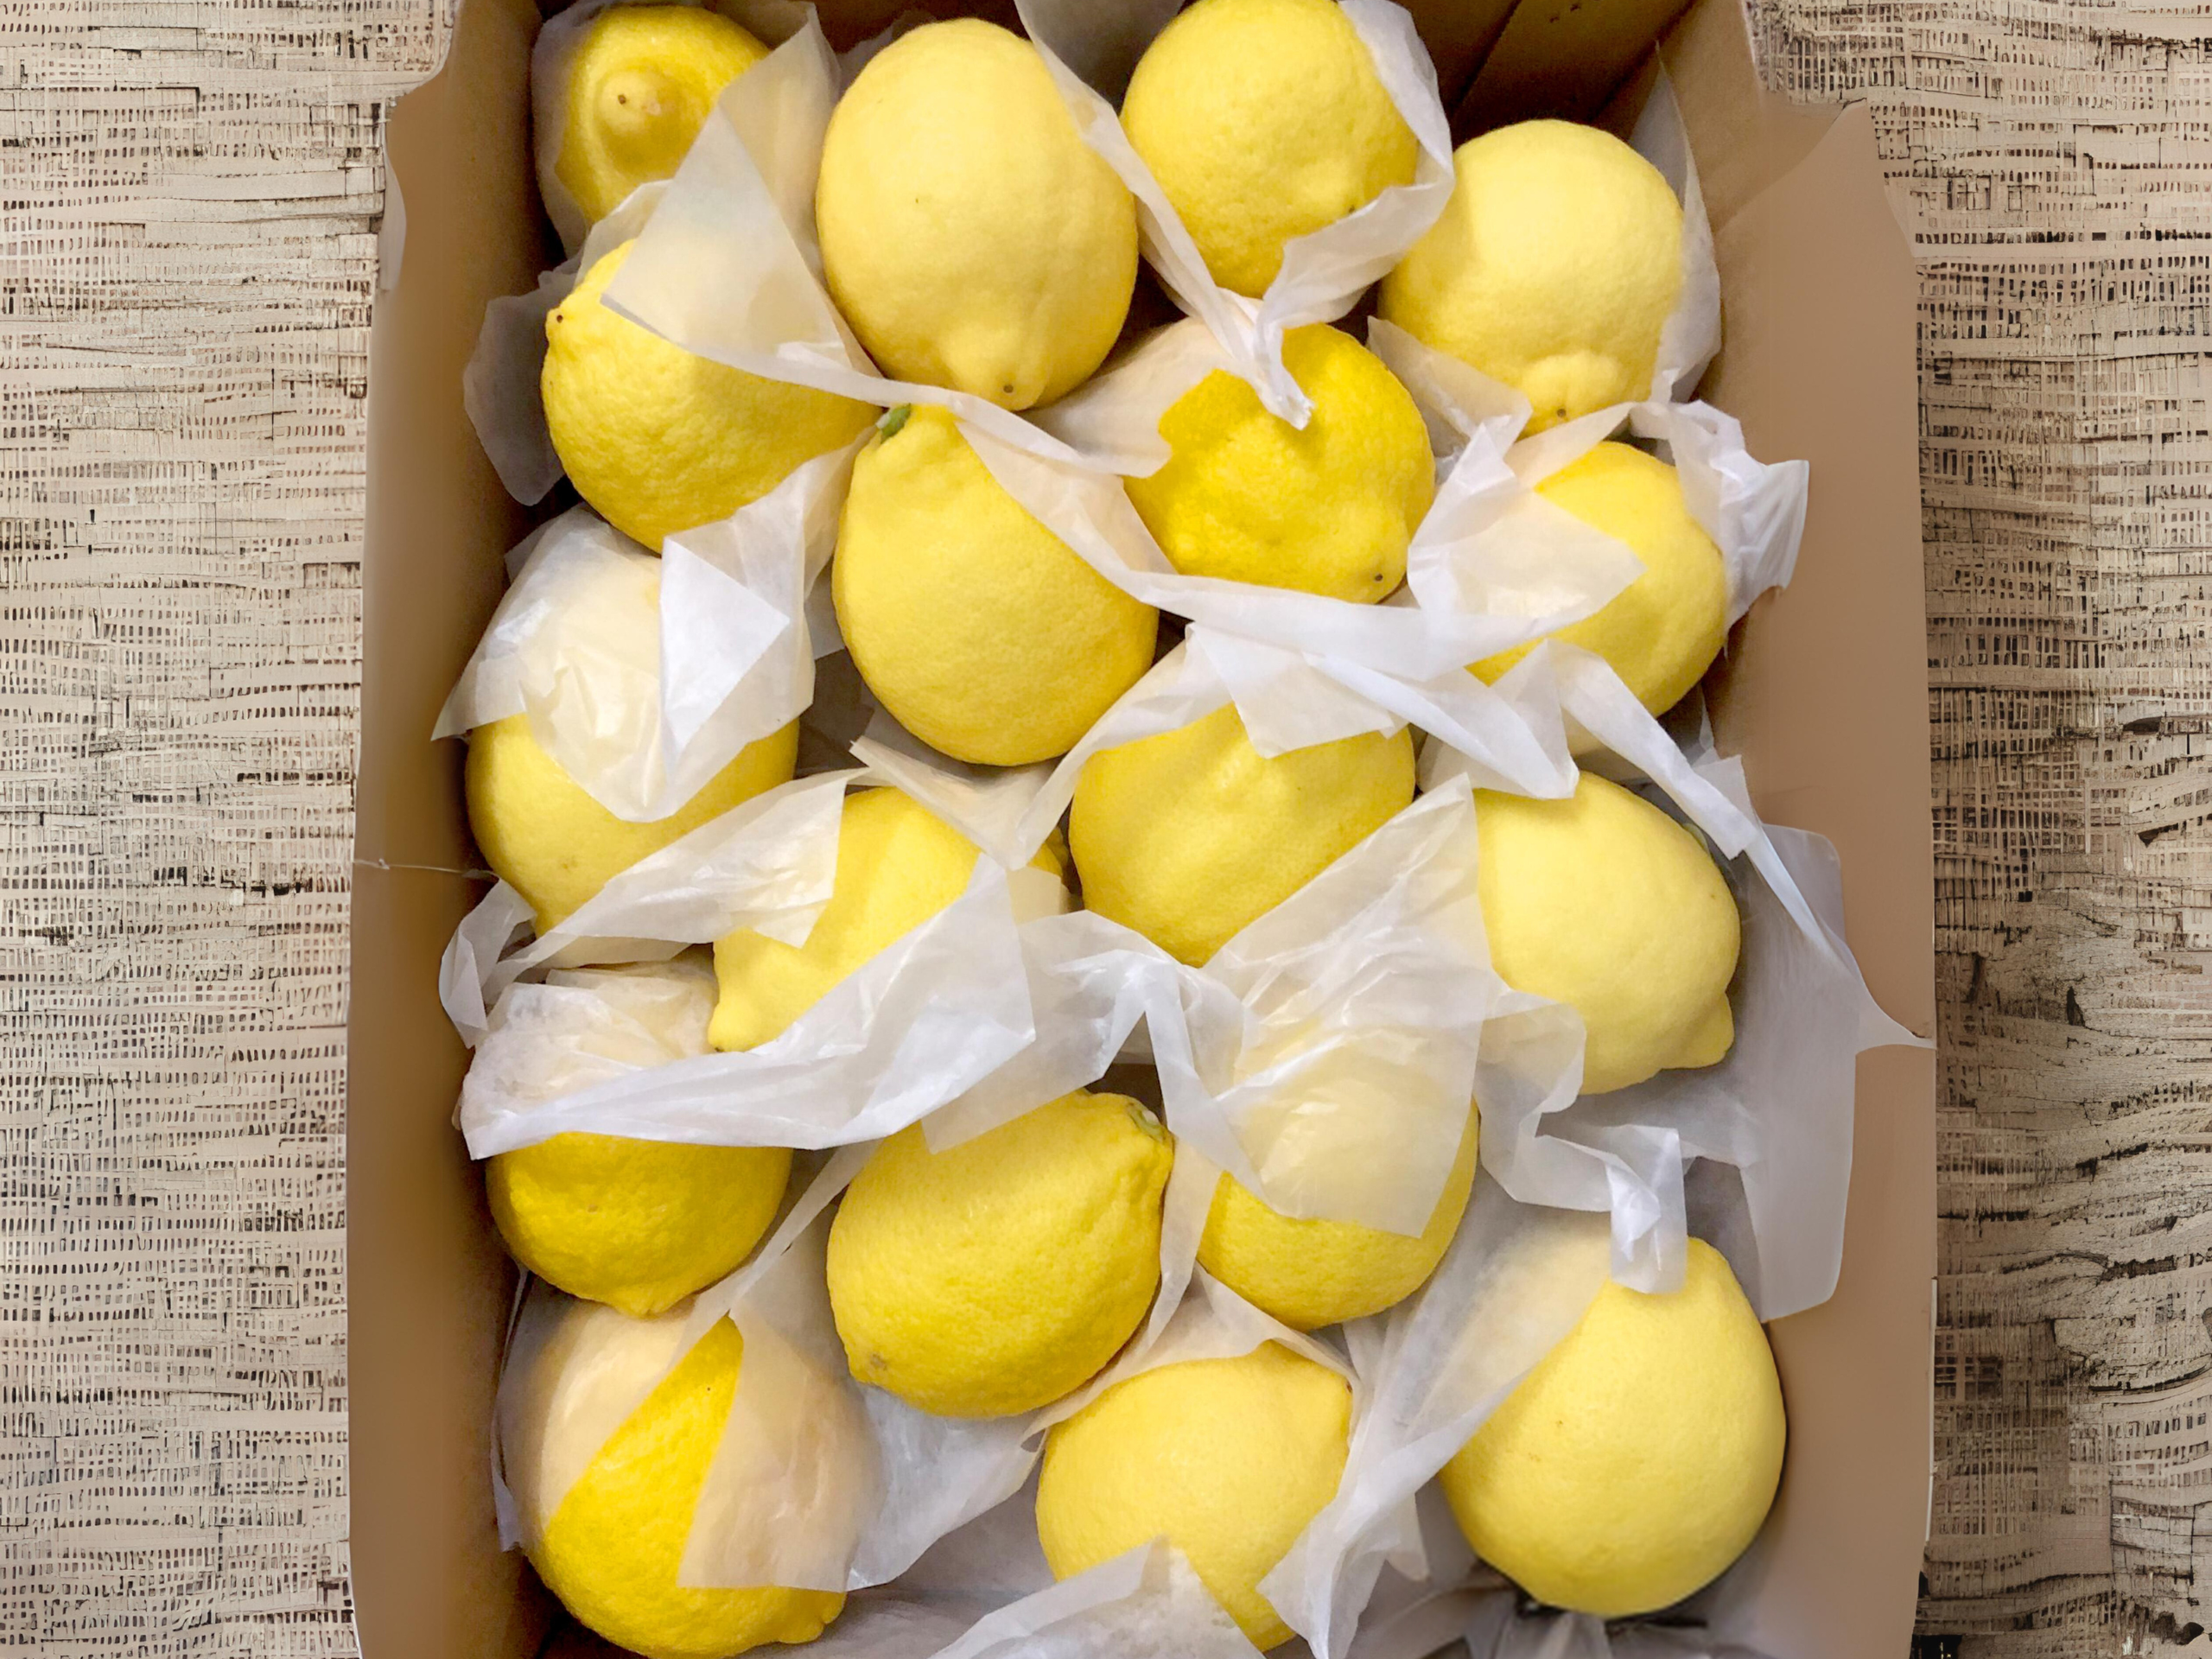 Washing lemon in cheerfarm, premium dried fruits